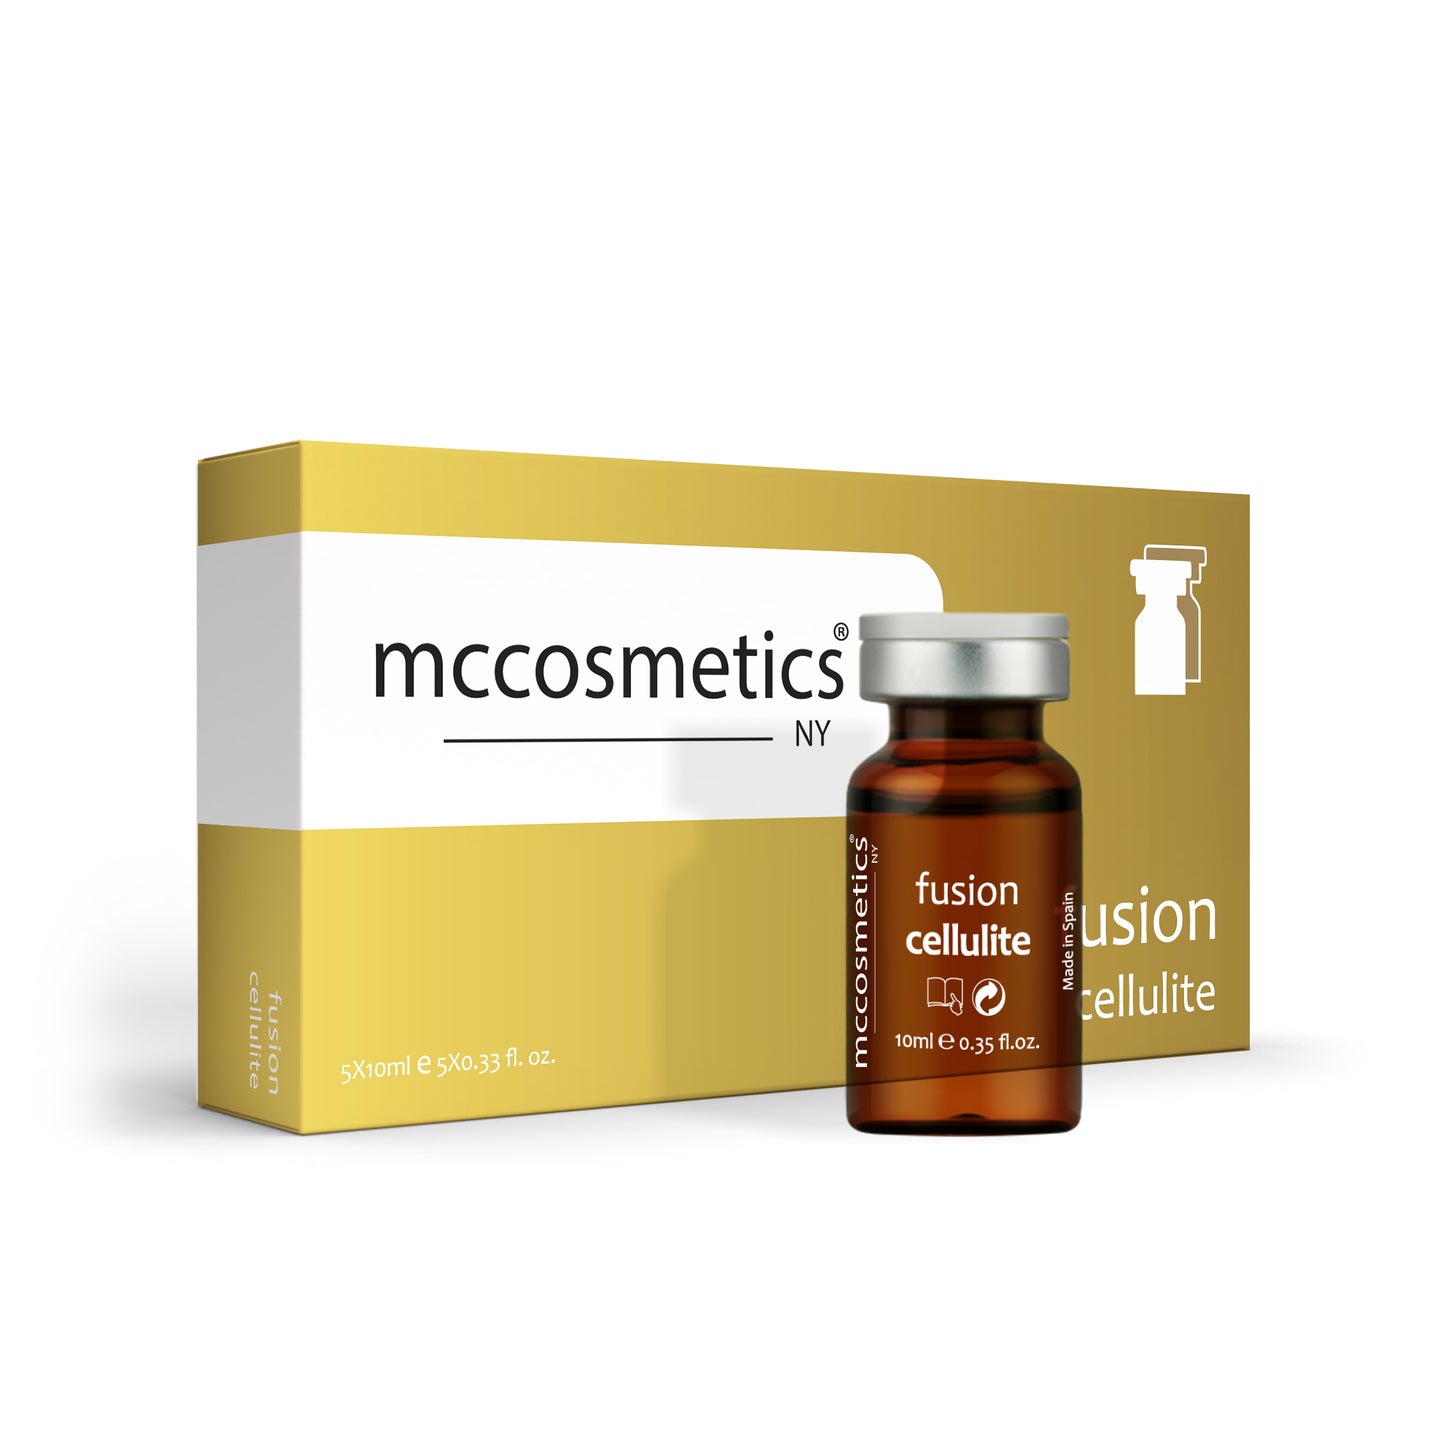 MCCosmetics NY | Fusion Cellulite